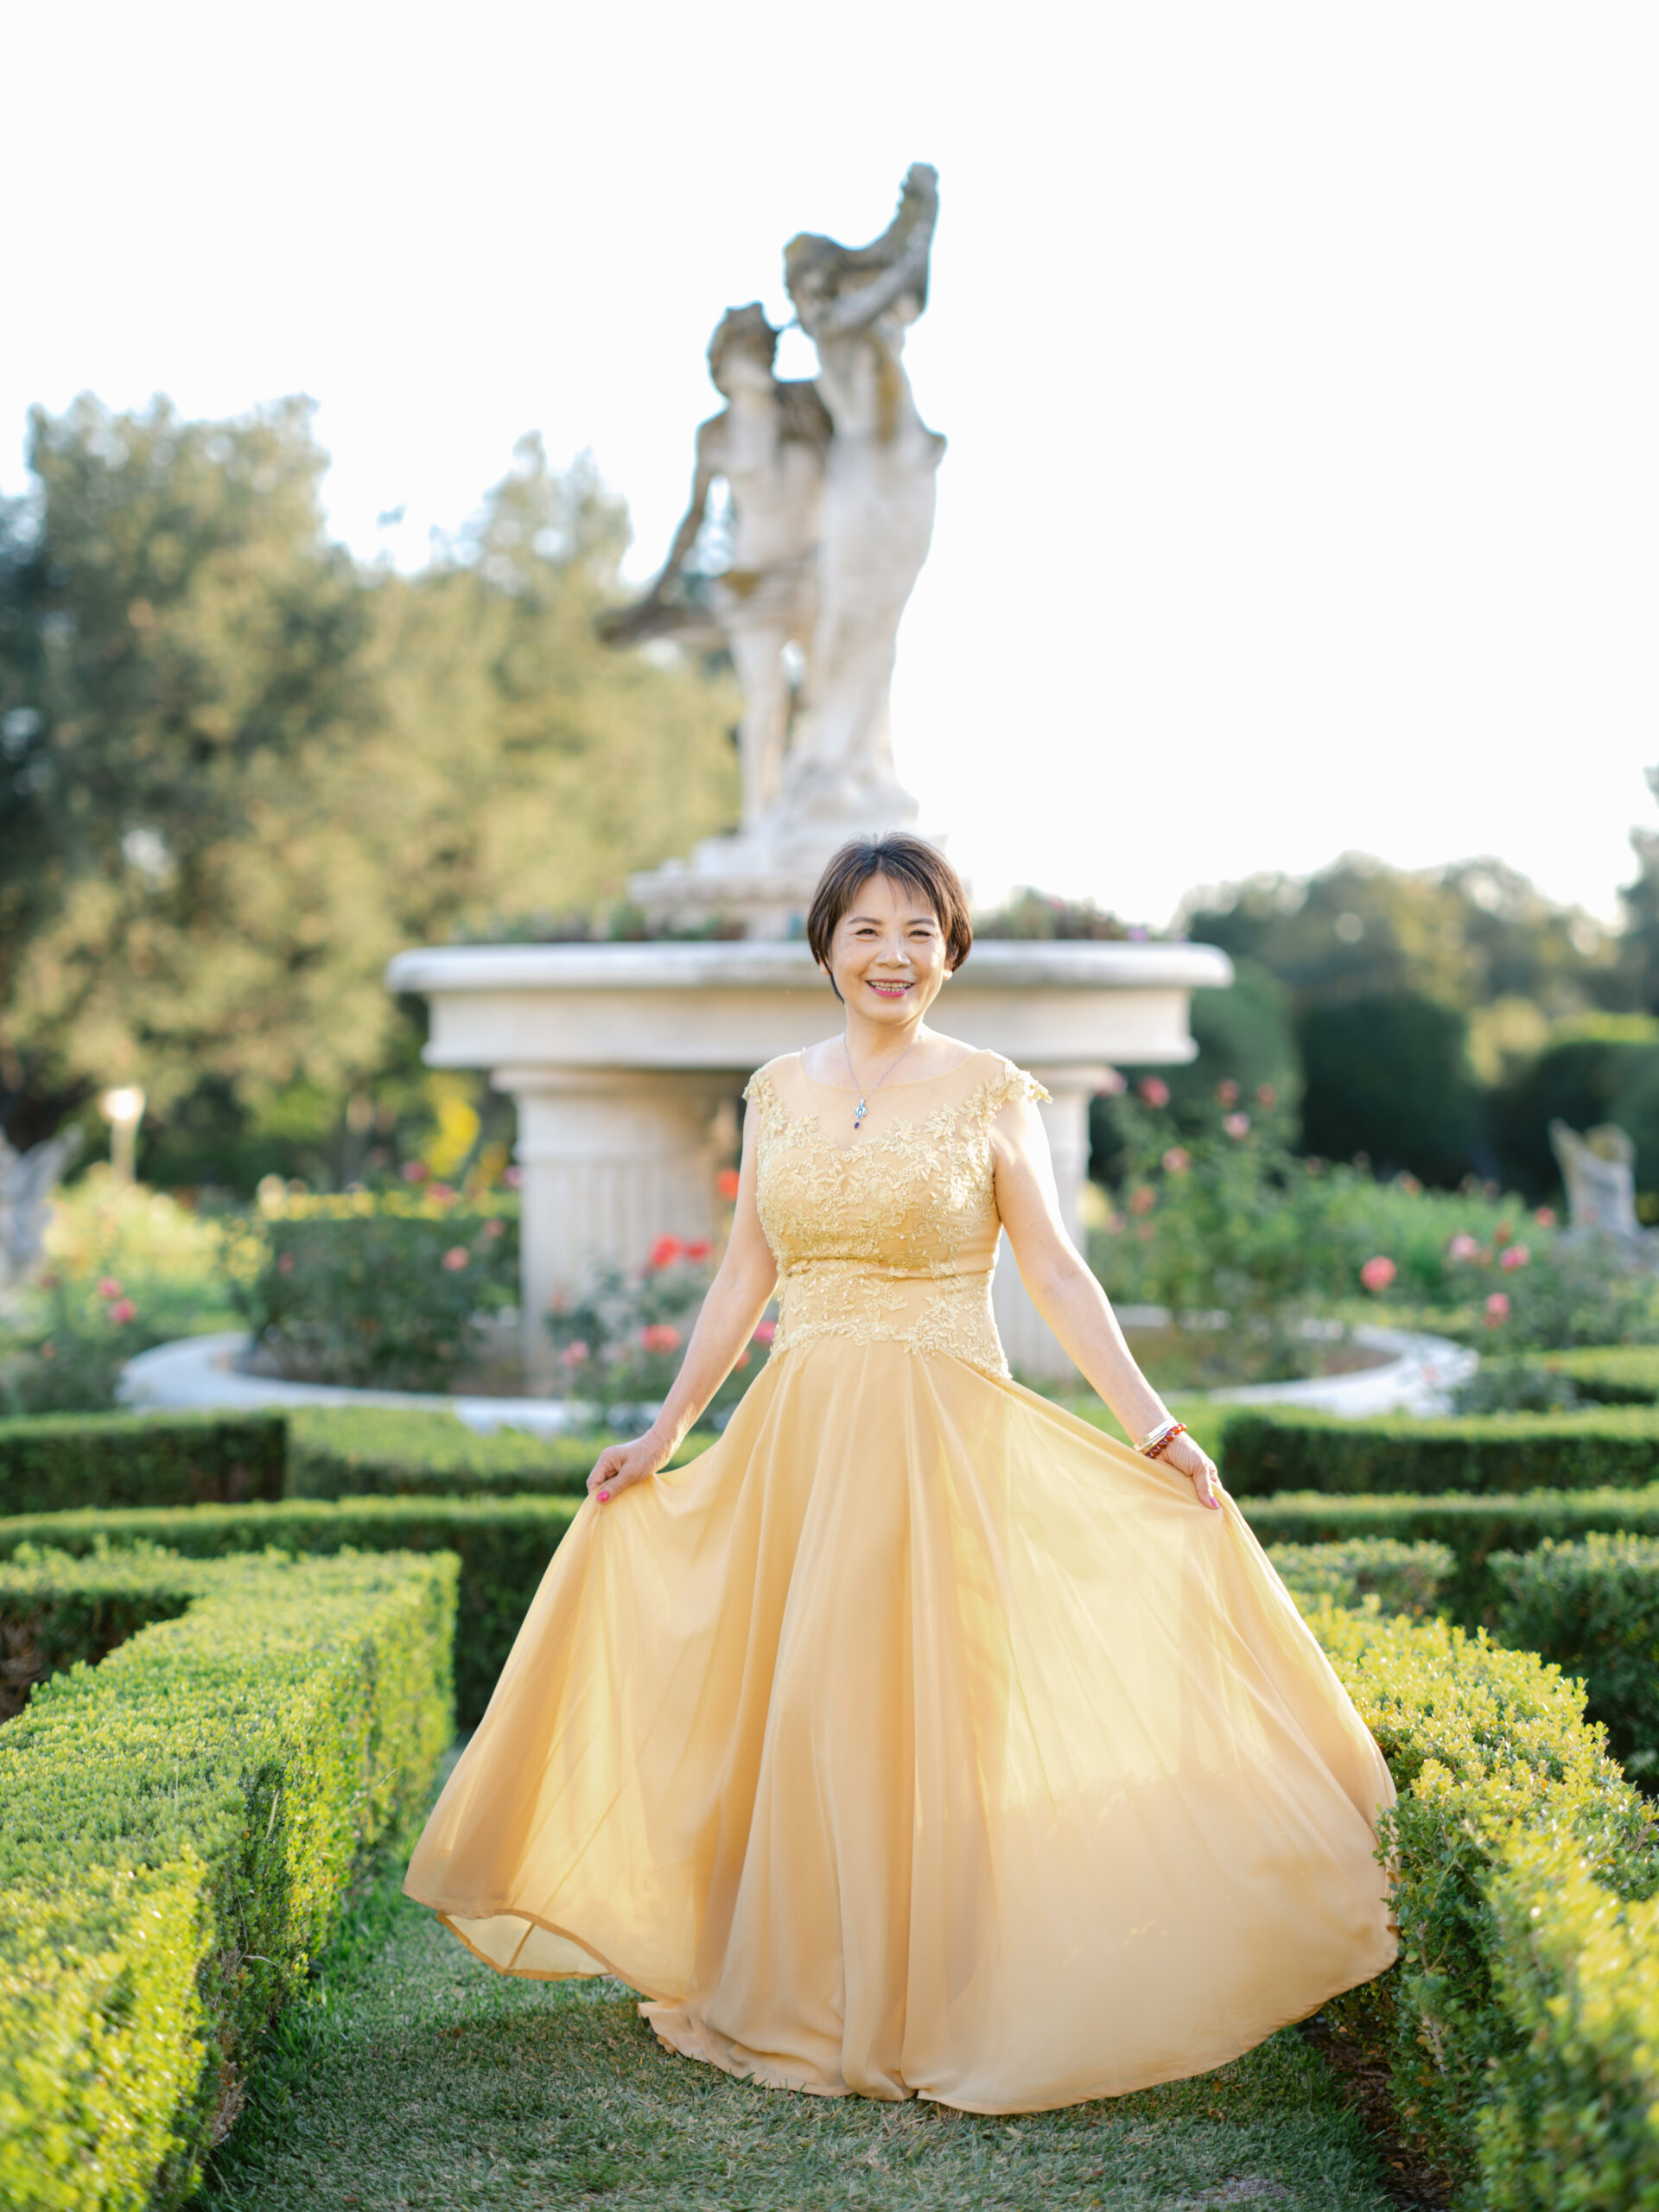 Pasadena Princess Portrait Photography